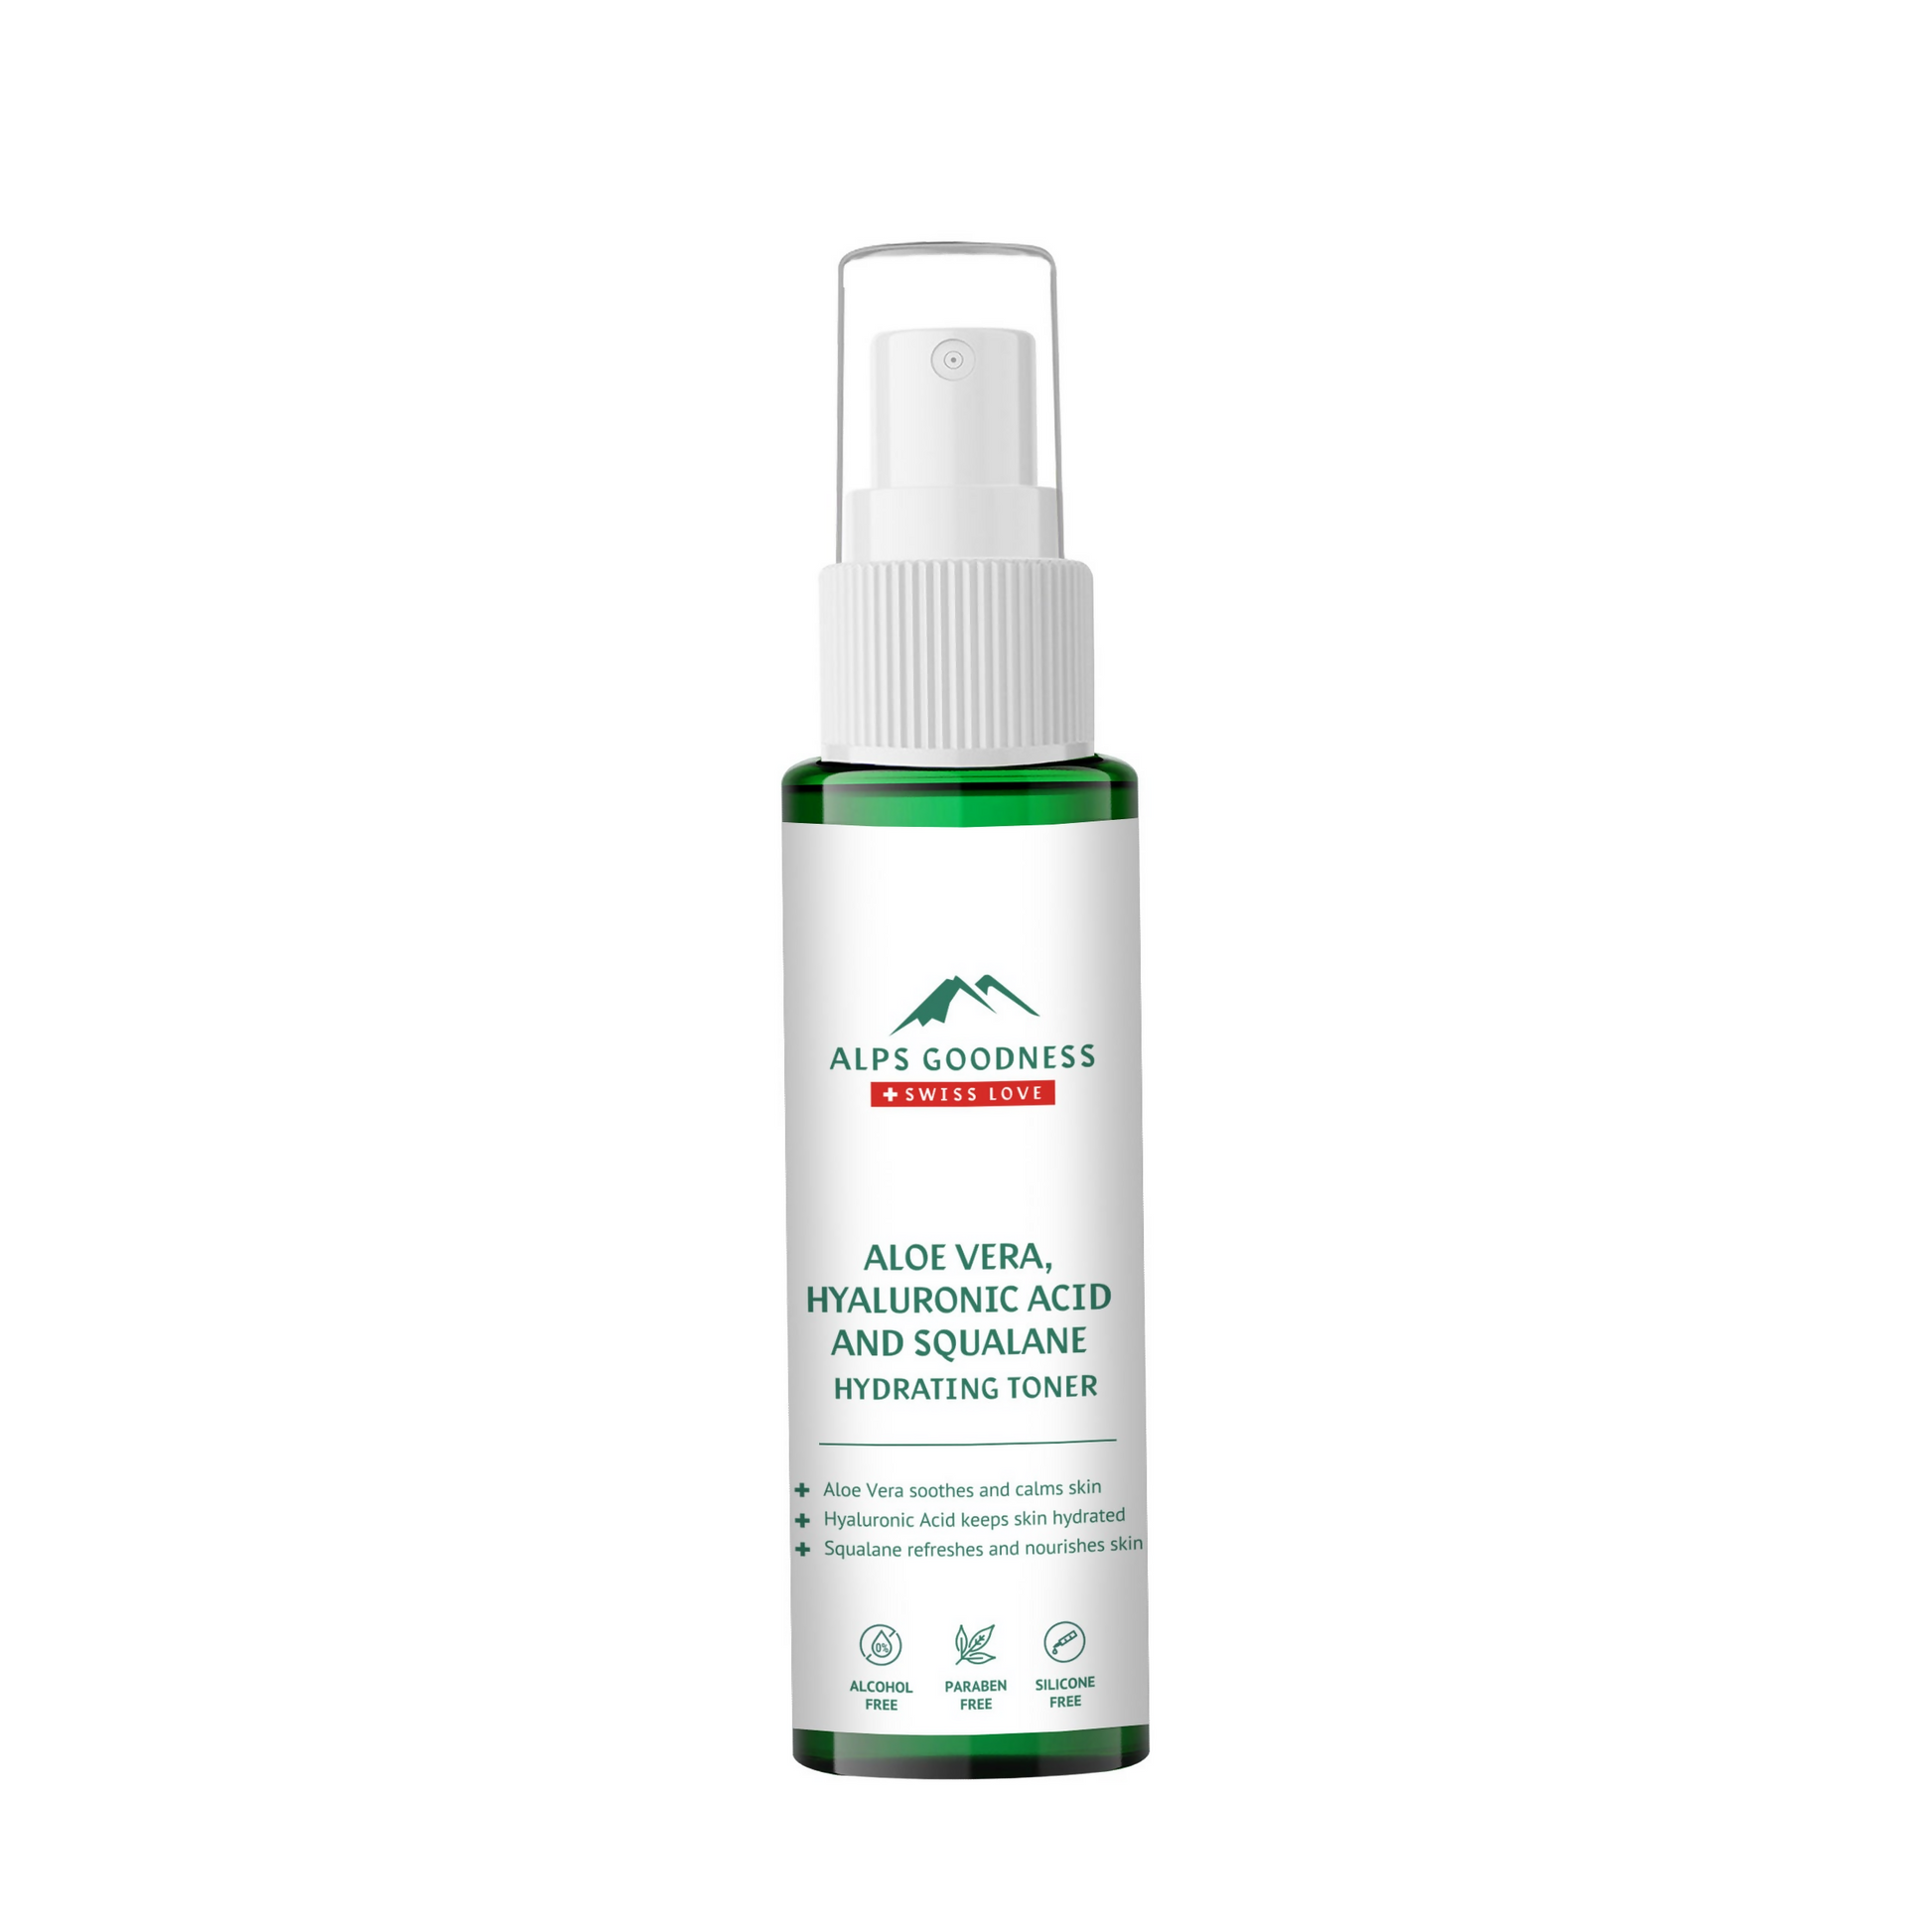 Alps Goodness Aloe Vera, Squalane & Hyaluronic Acid Hydrating Toner - buy in USA, Australia, Canada